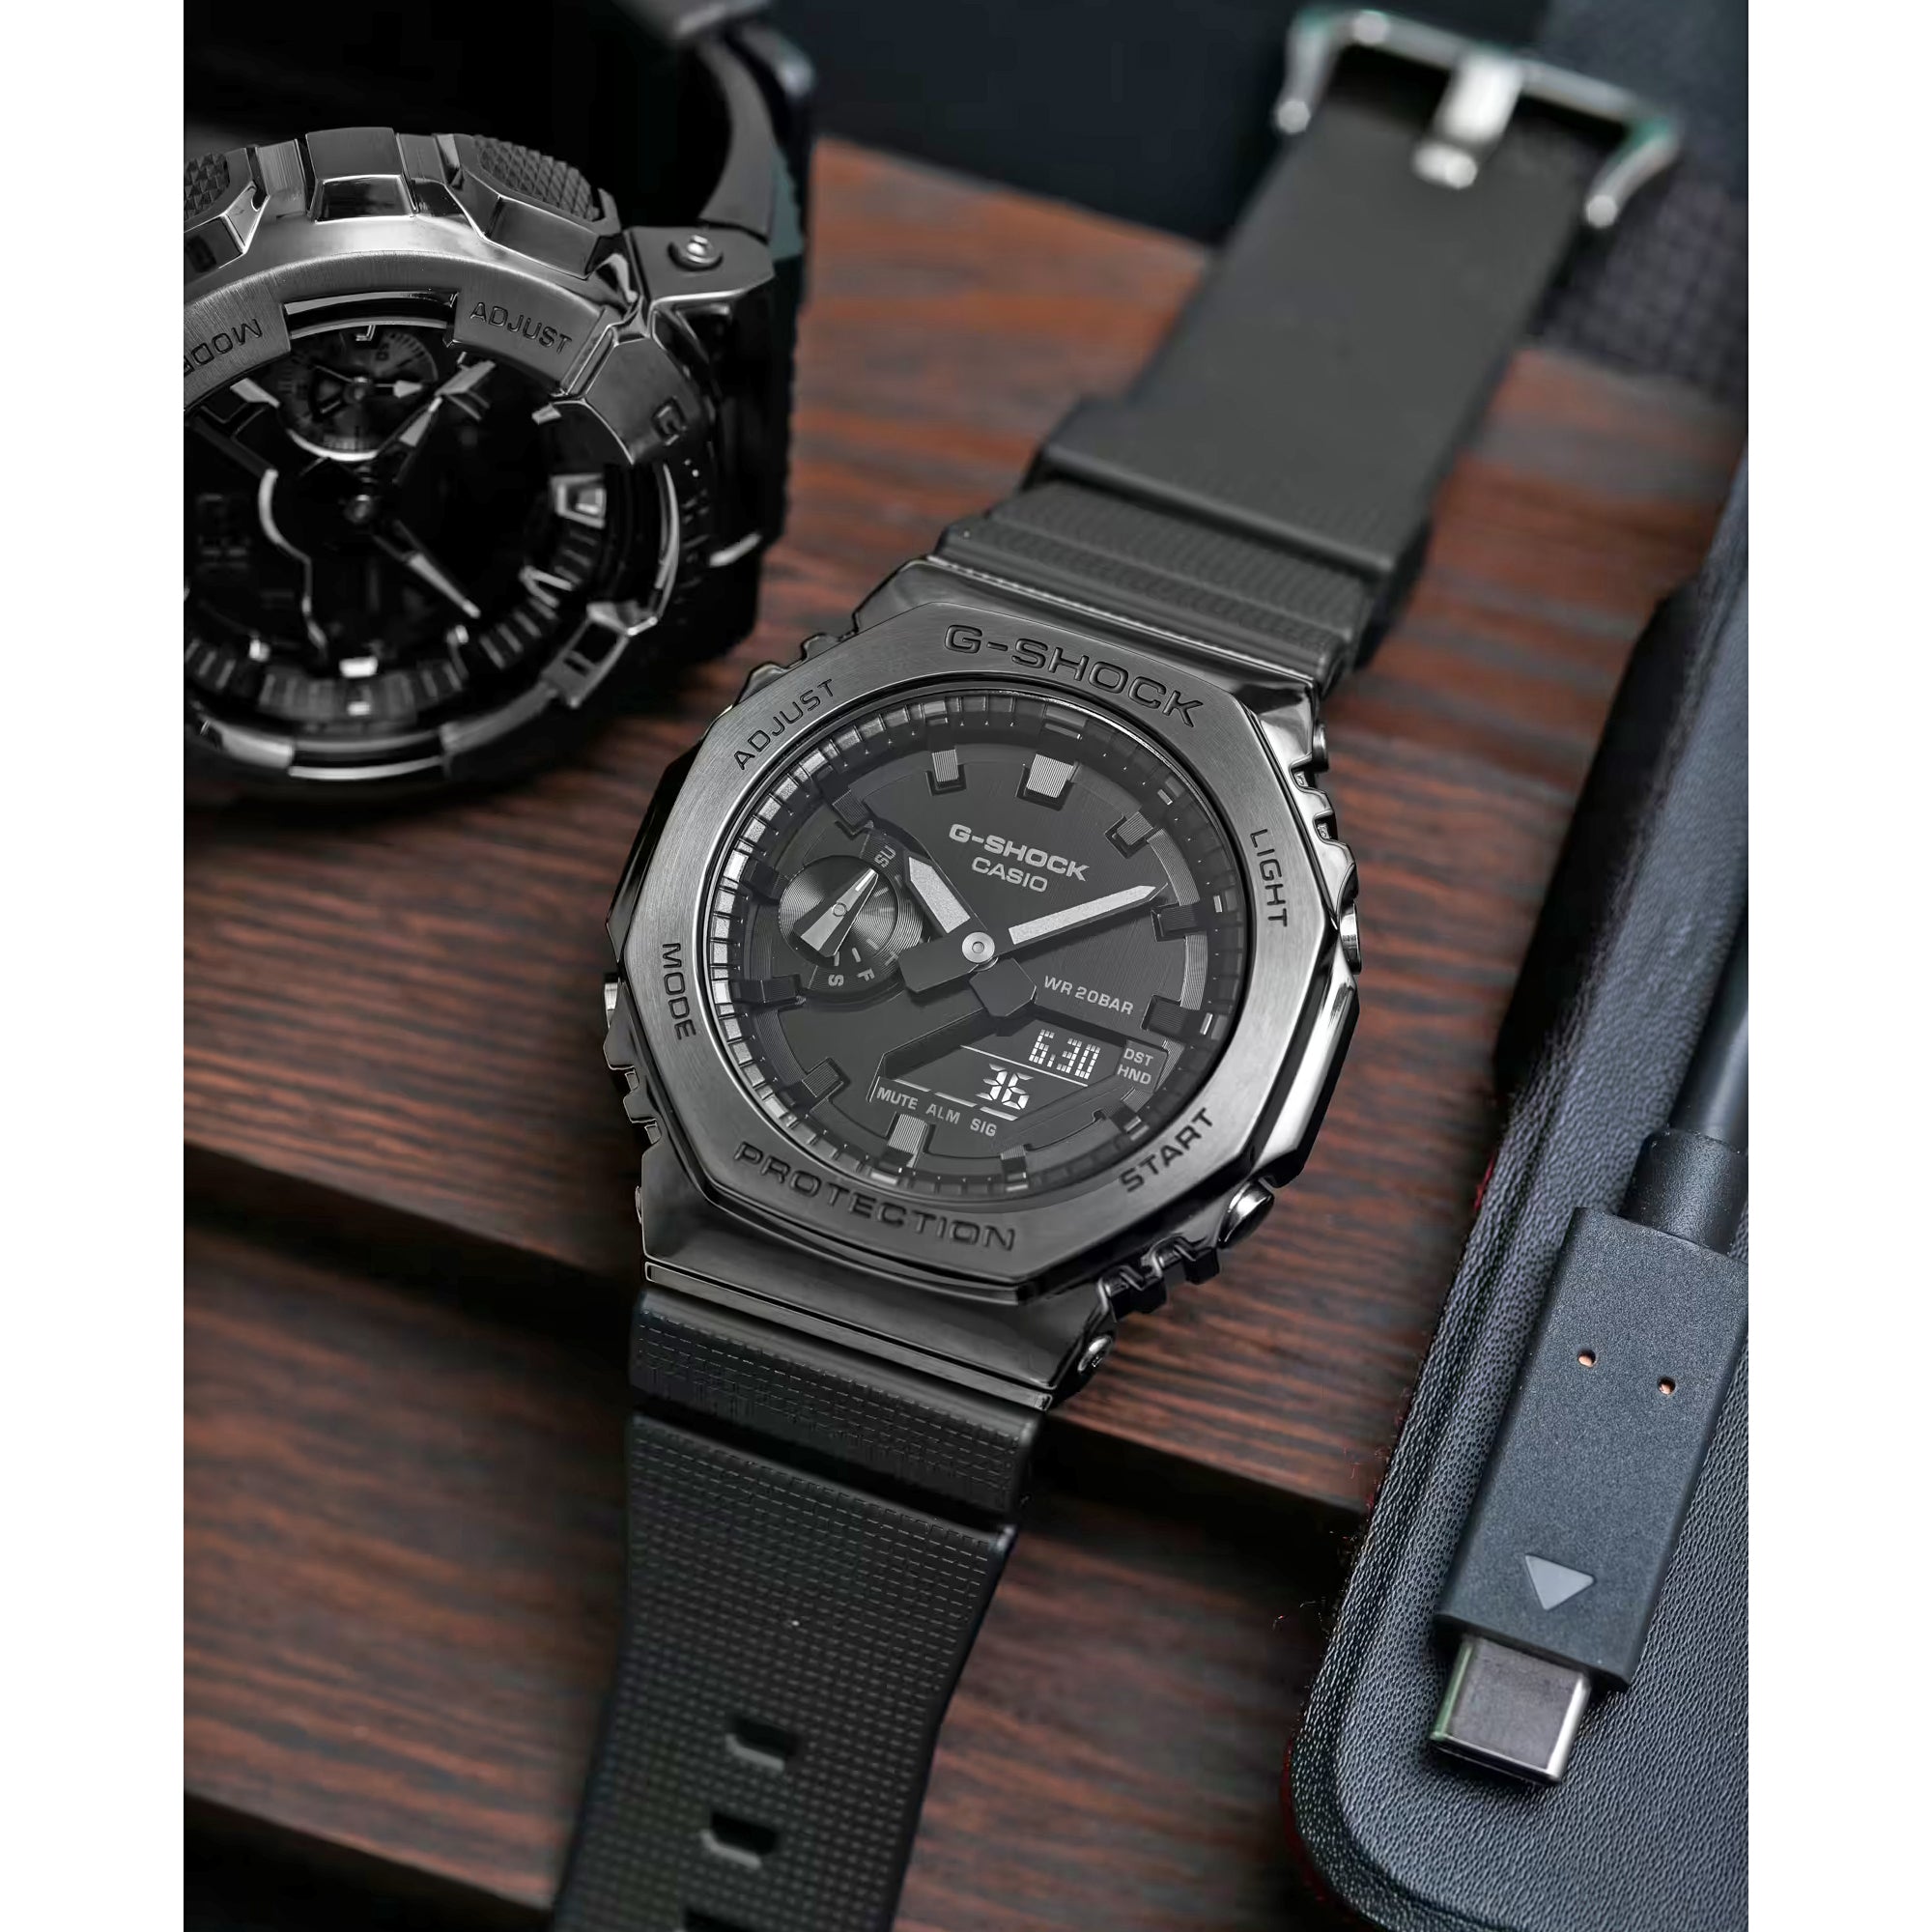 Casio NAGI CasiOak G-Shock GM2100BB-1A GM2100 – Black-on-Black Watch Series